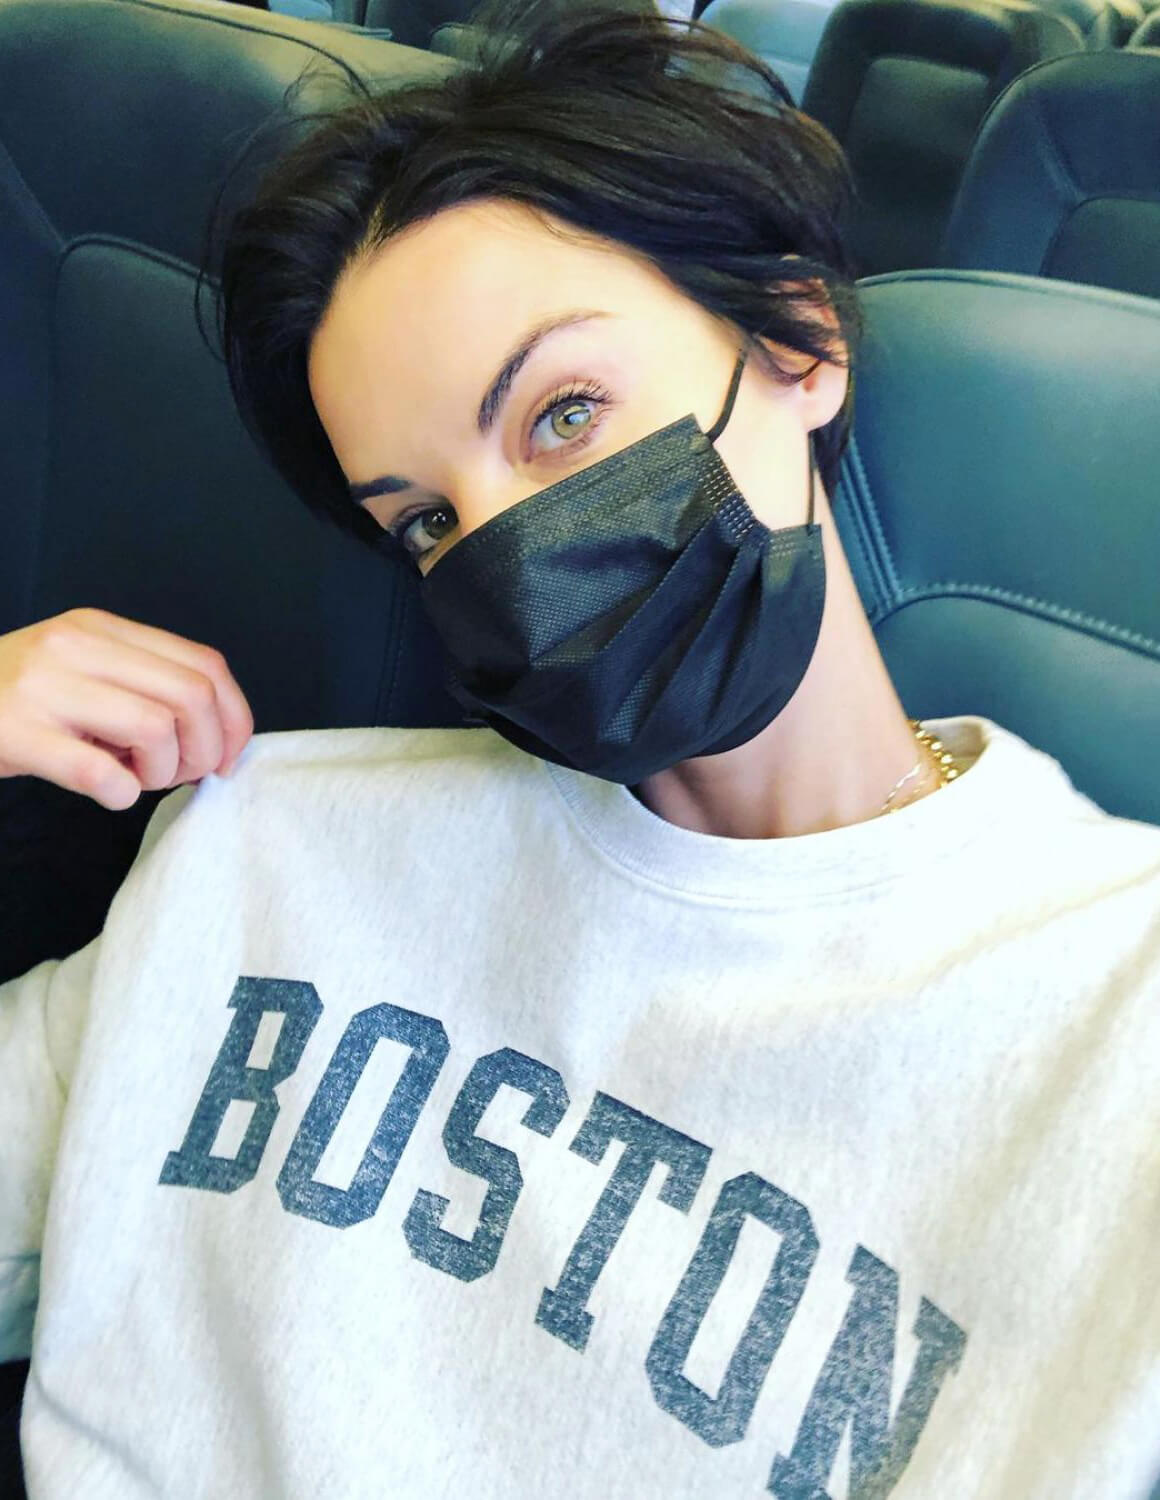 Jaimie Alexander wearing Black Face Mask - Instagram Photos 12/05/2020 2